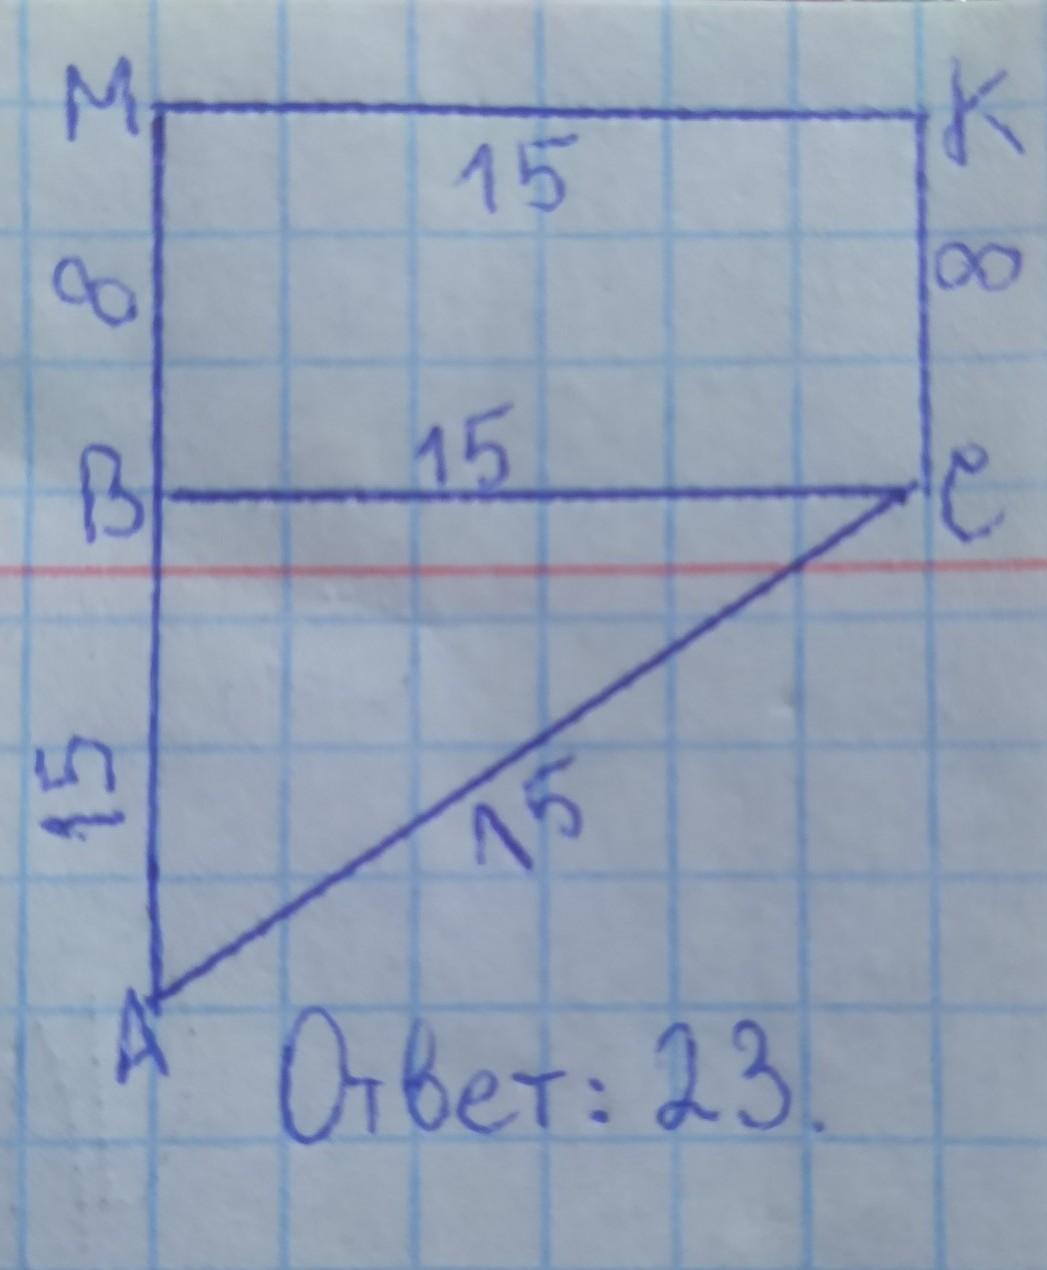 Ответ:

23

Объяснение:

1) ∆ABC – равносторонний → AB=BC=CA=45:3=15.

2) BC – одна из сторон ВМКС. 